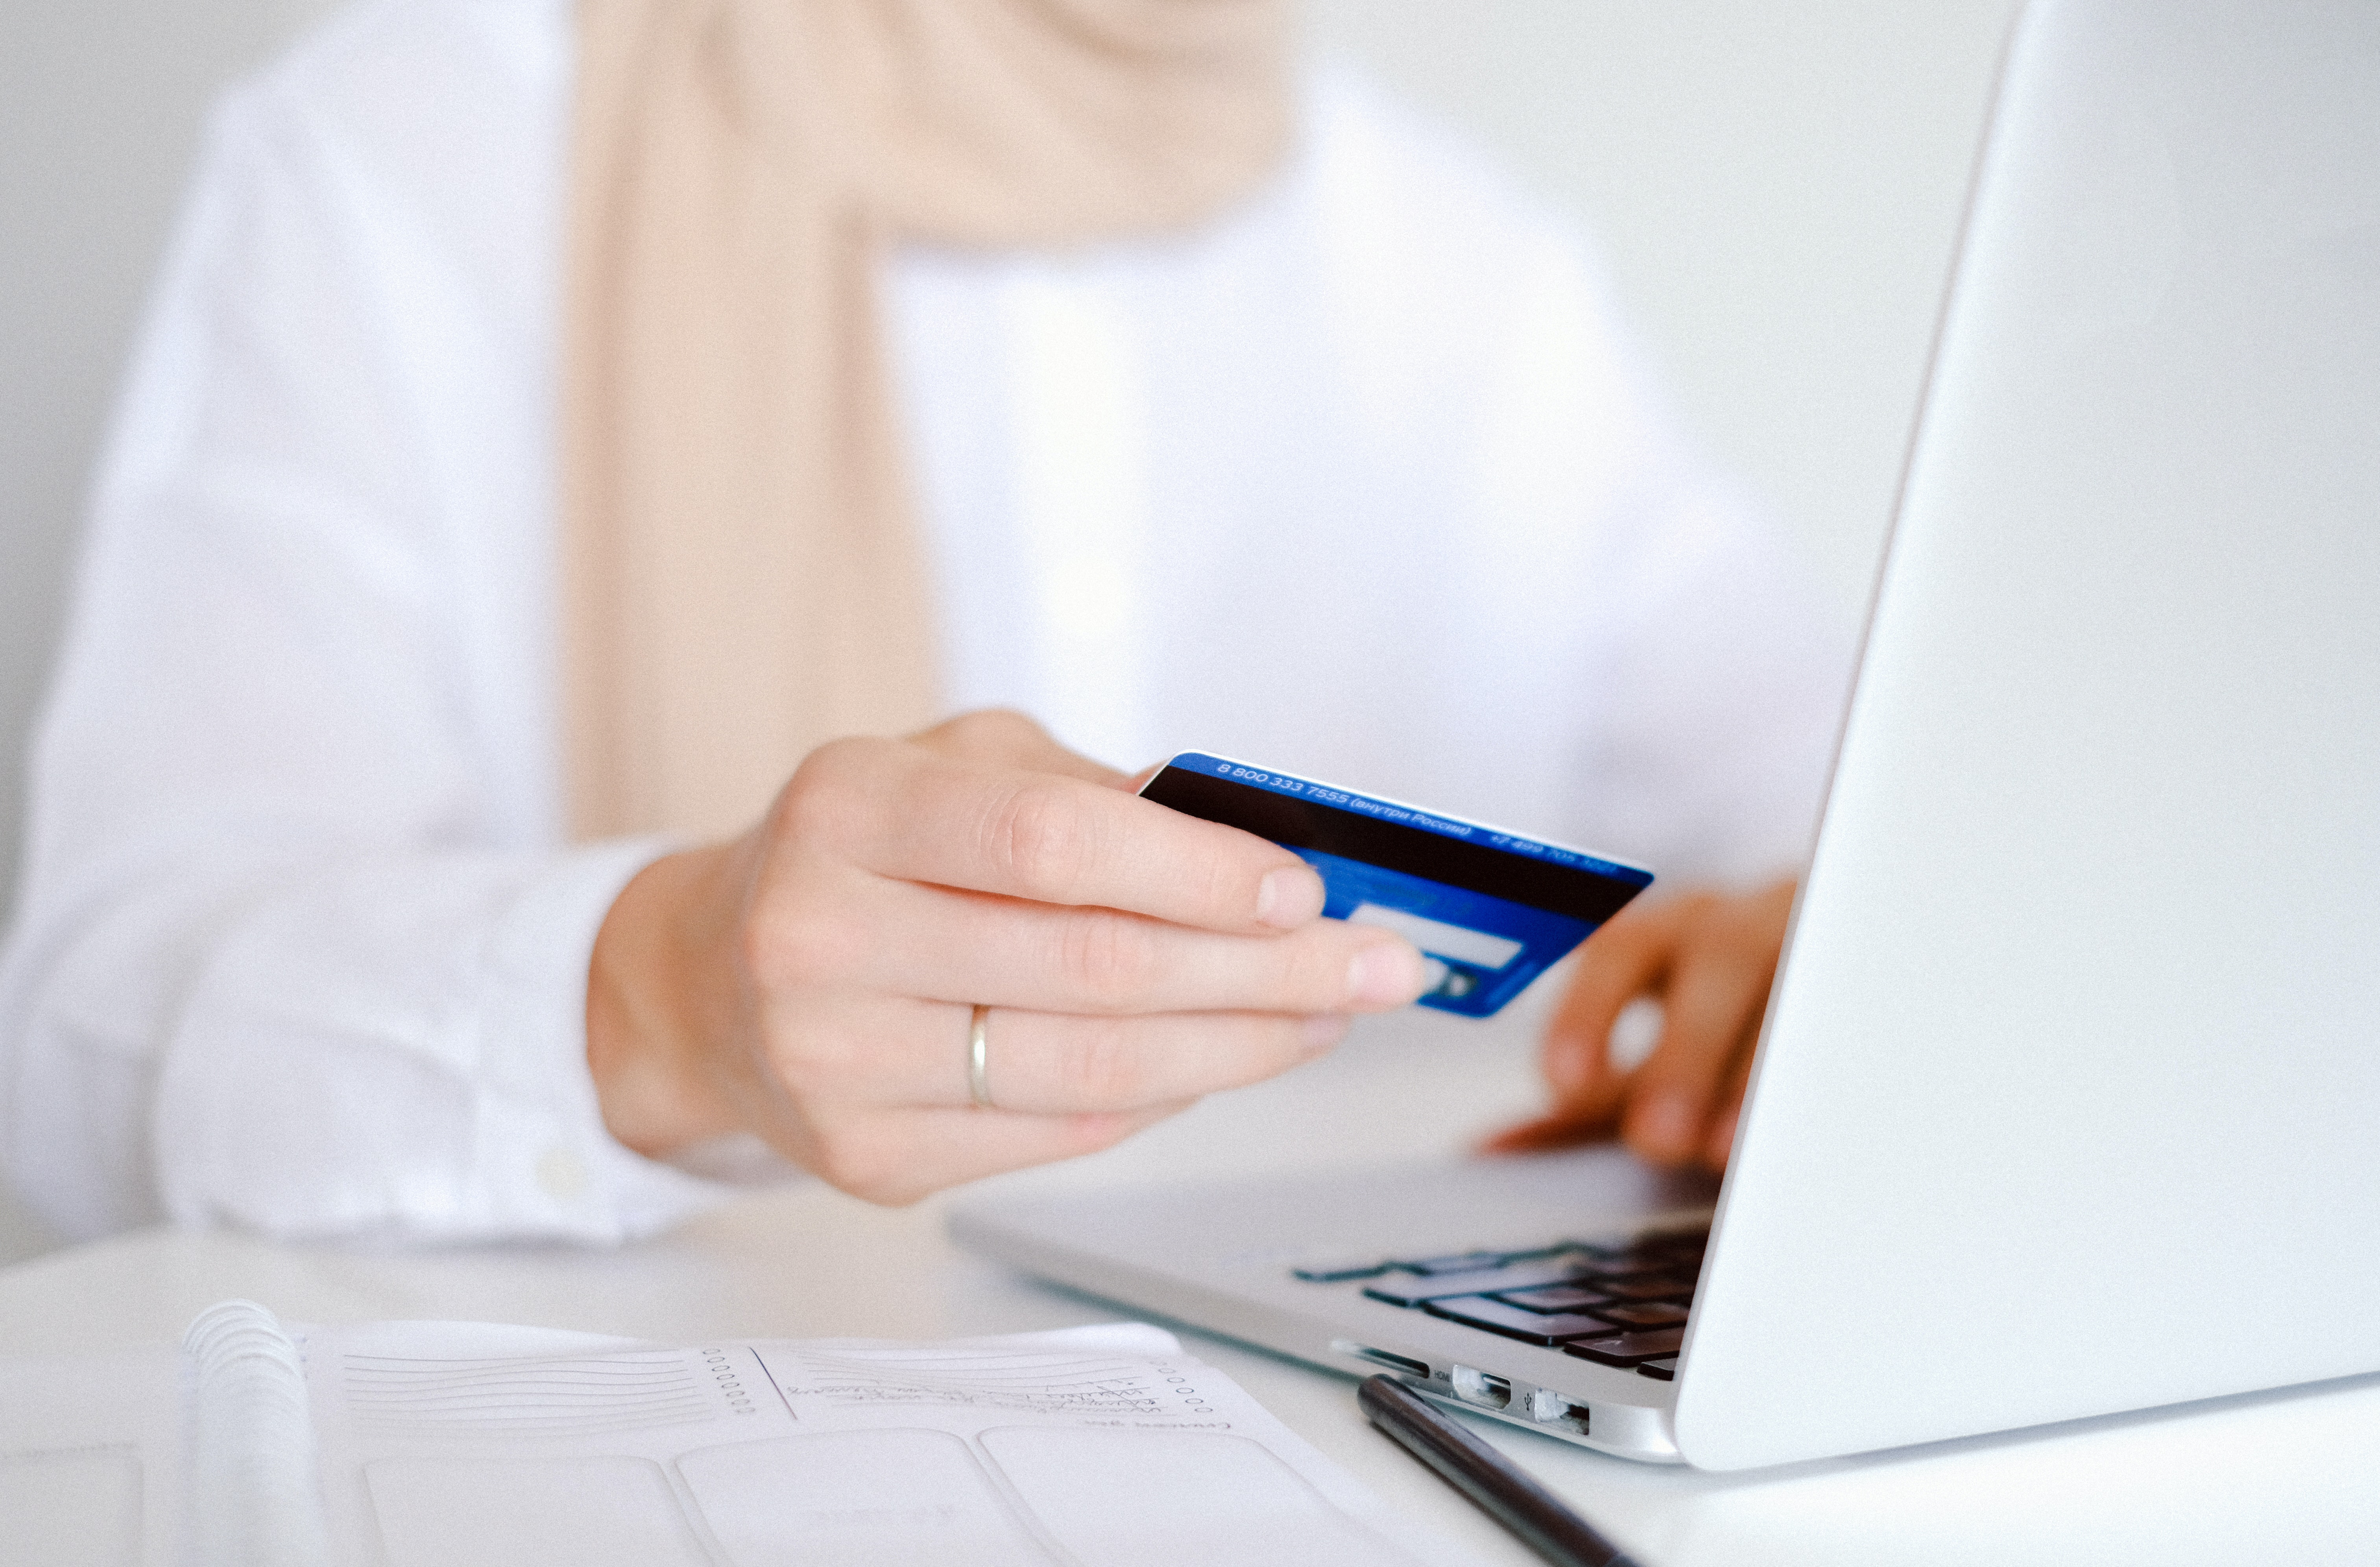 A woman in white dress makes an online payment through debit card